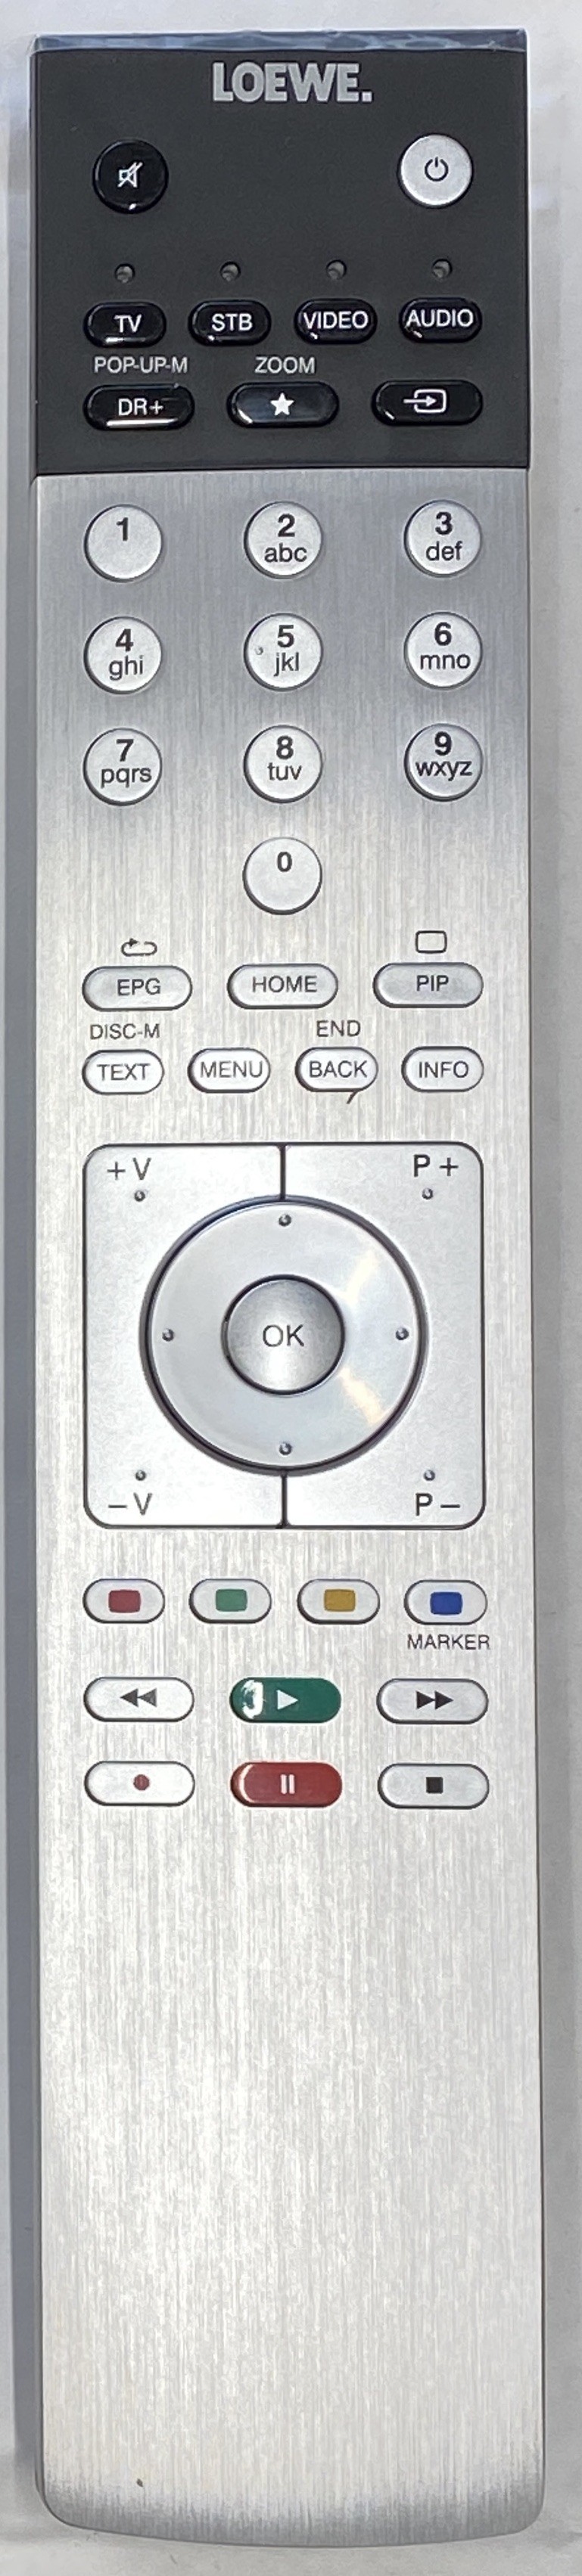 LOEWE XELOS32SL Remote Control Original 